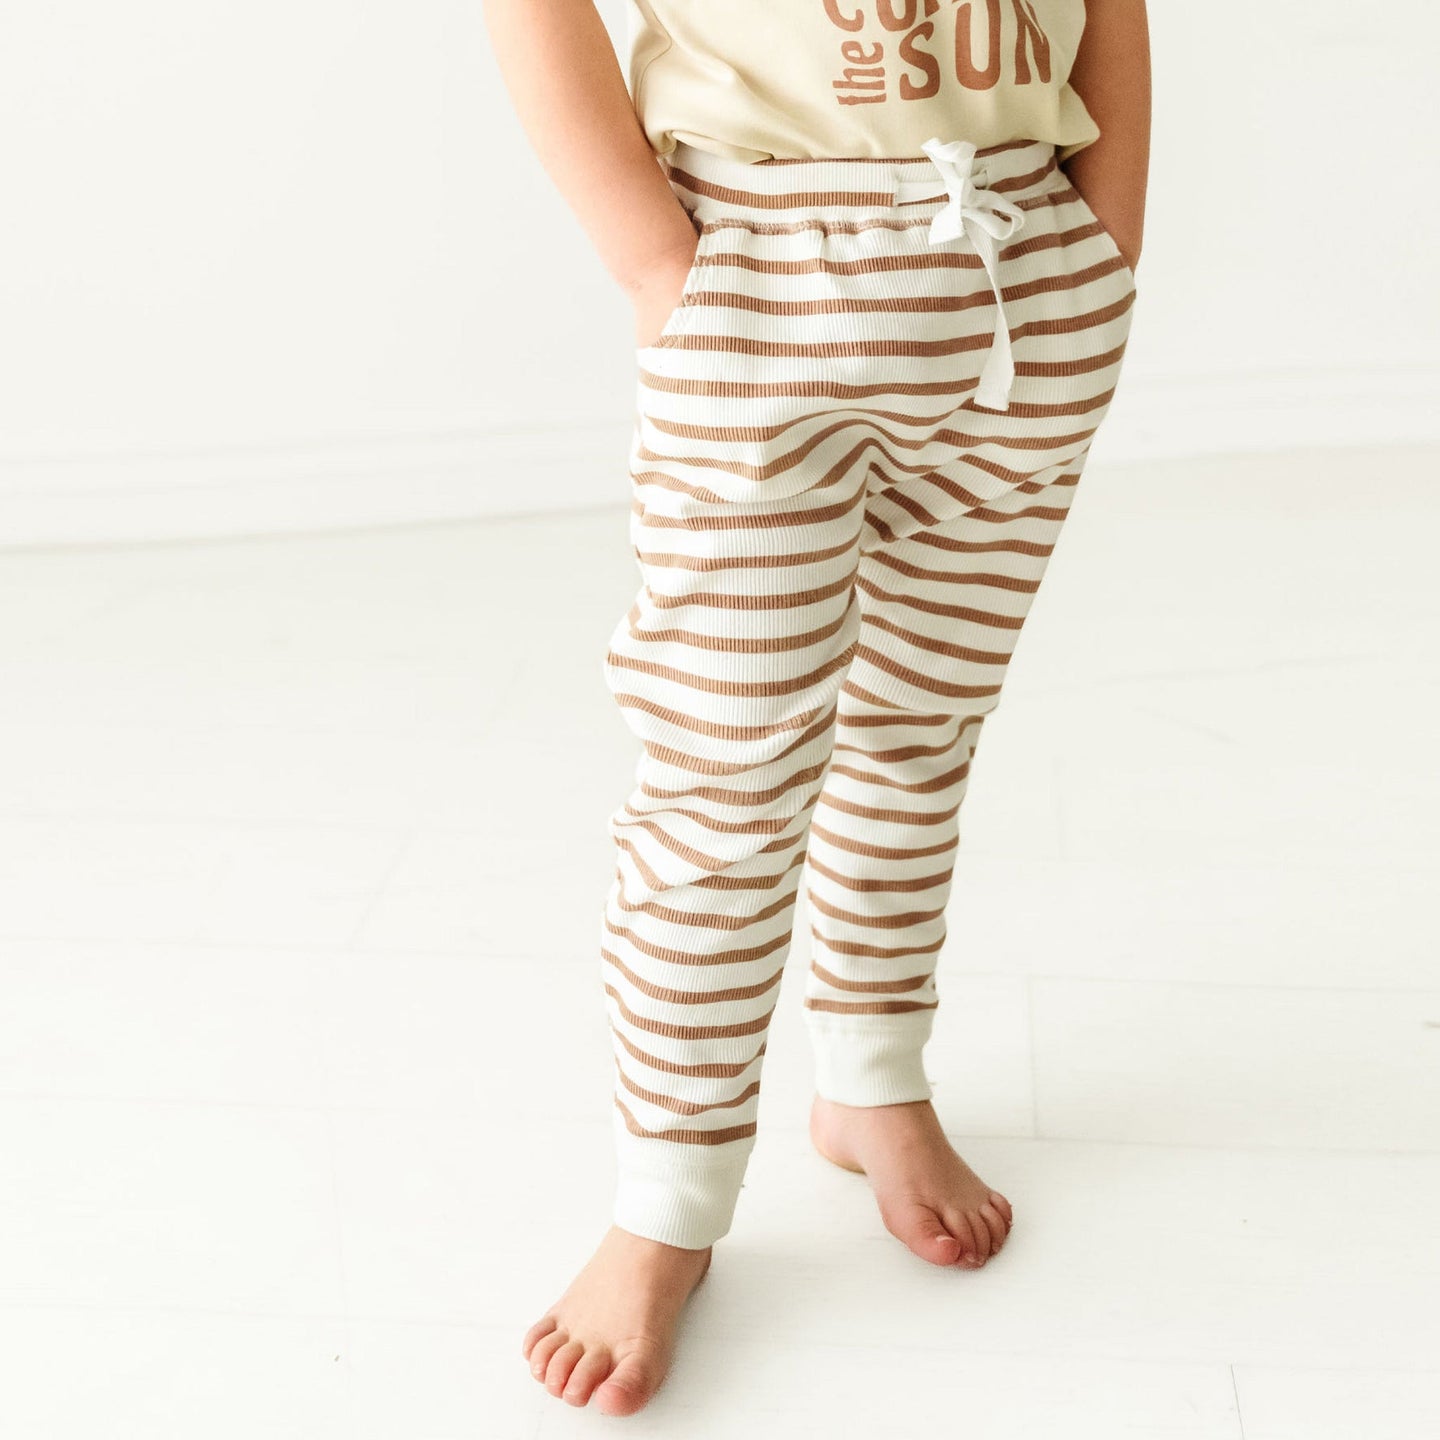 Organic Harem Pants - Stripes